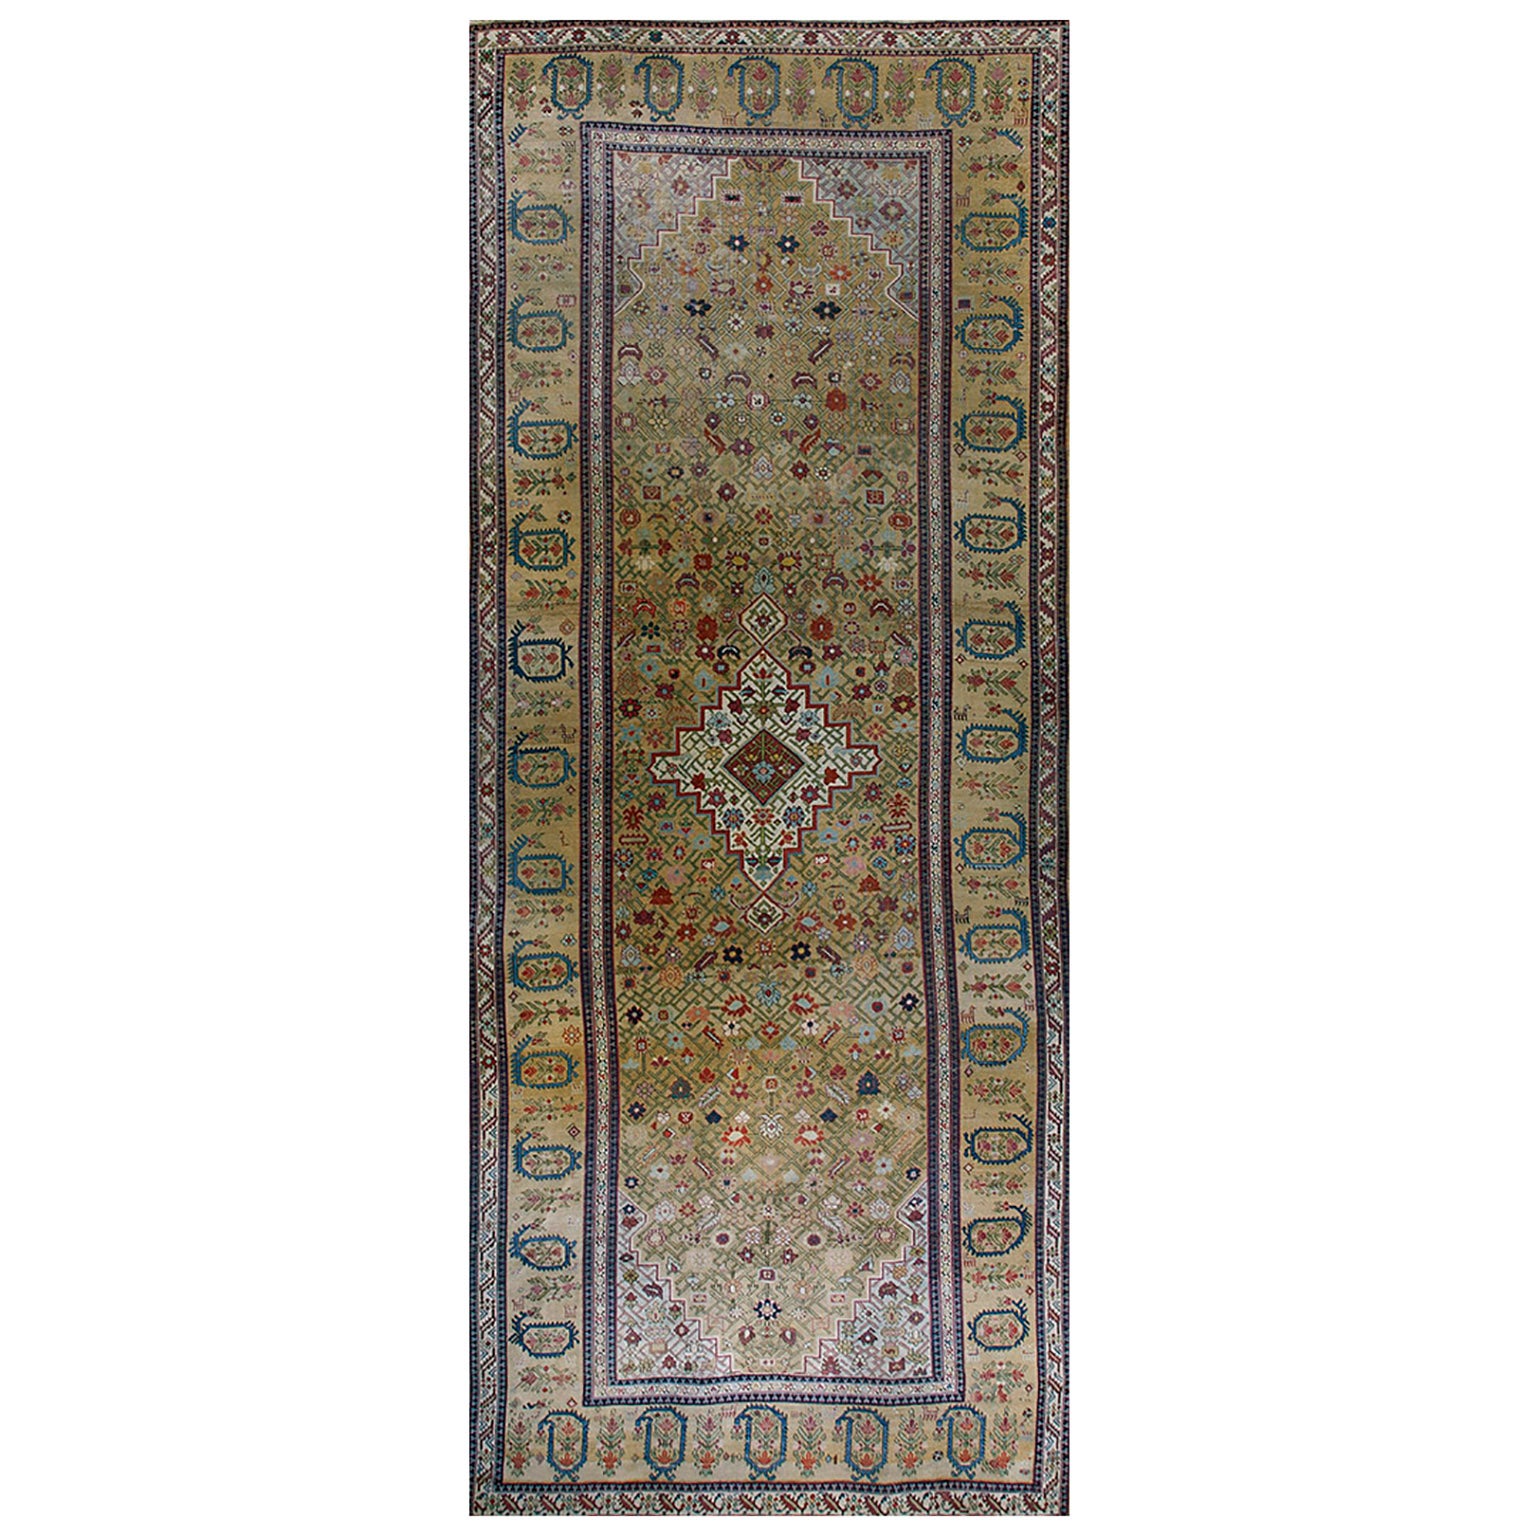 Mid 19th Century Caucasian Shusha Karabagh Carpet ( 7'2" x 18' - 220 x 550 ) For Sale